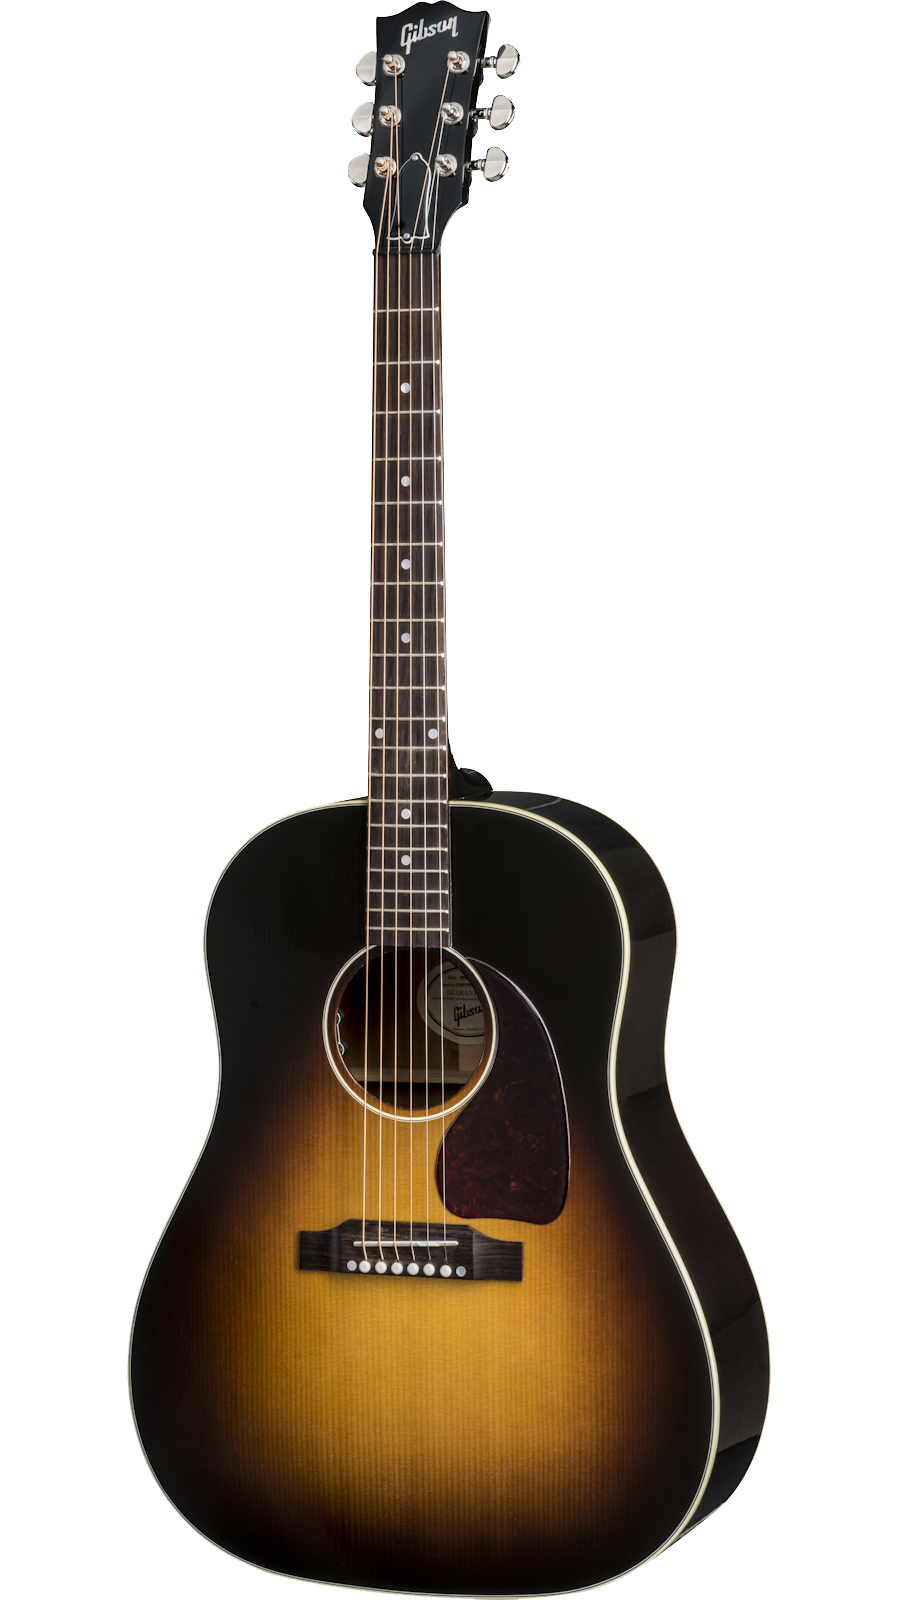 Gibson J 45 Standard acoustic guitar in Sunburst color Tone Shop Guitars Dallas TX